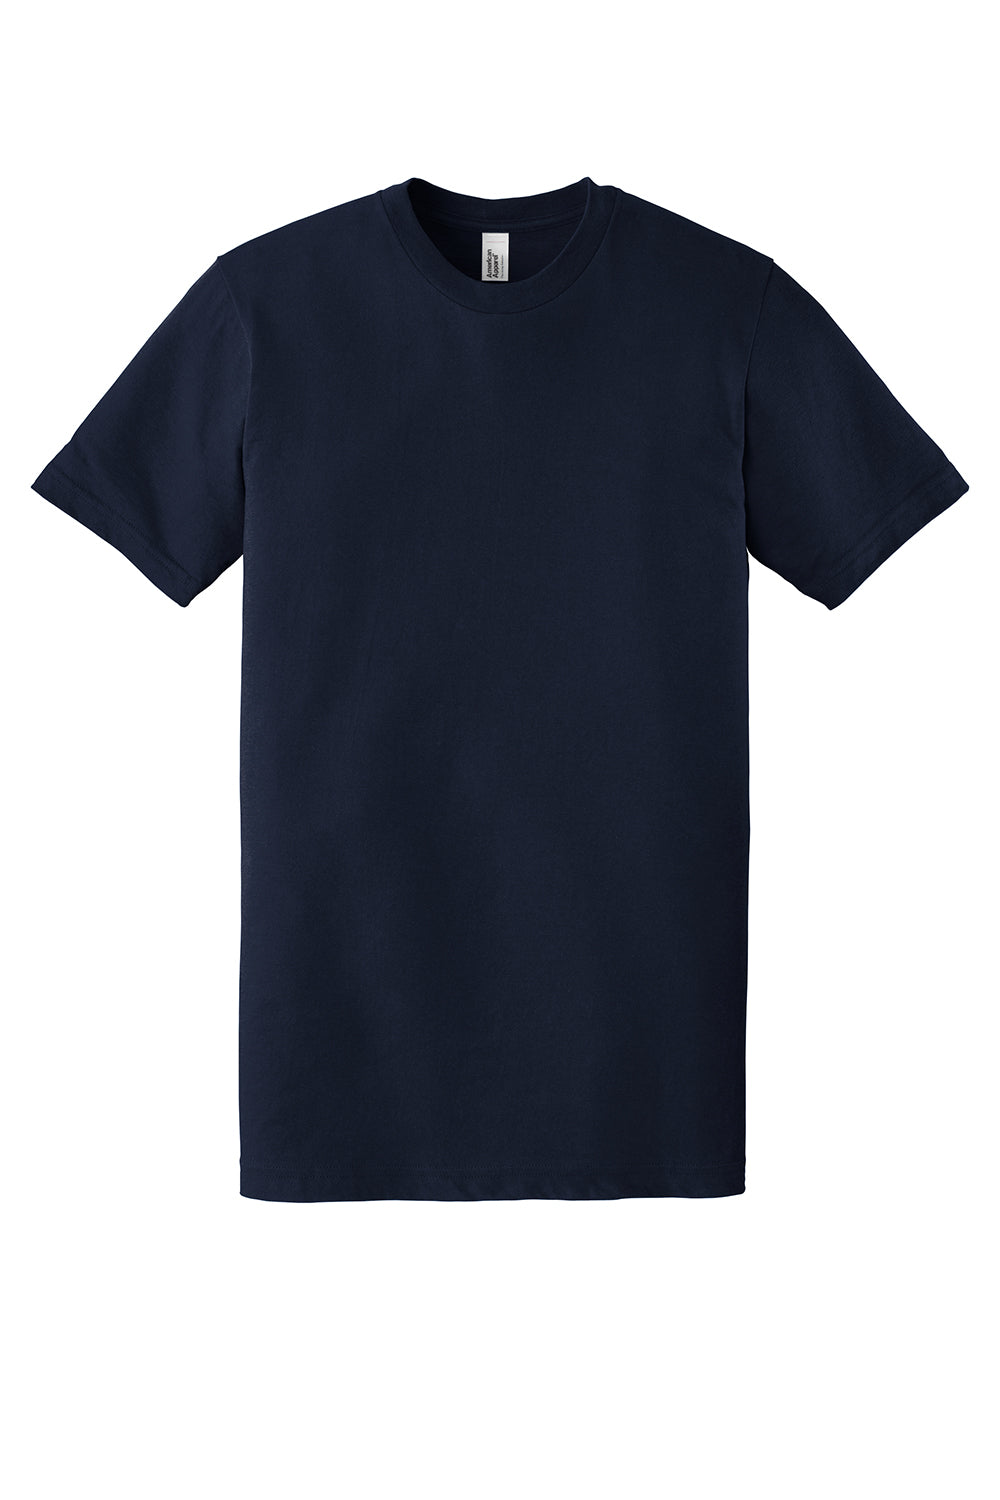 American Apparel 2001 Mens Fine Jersey Short Sleeve Crewneck T-Shirt Navy Blue Flat Front